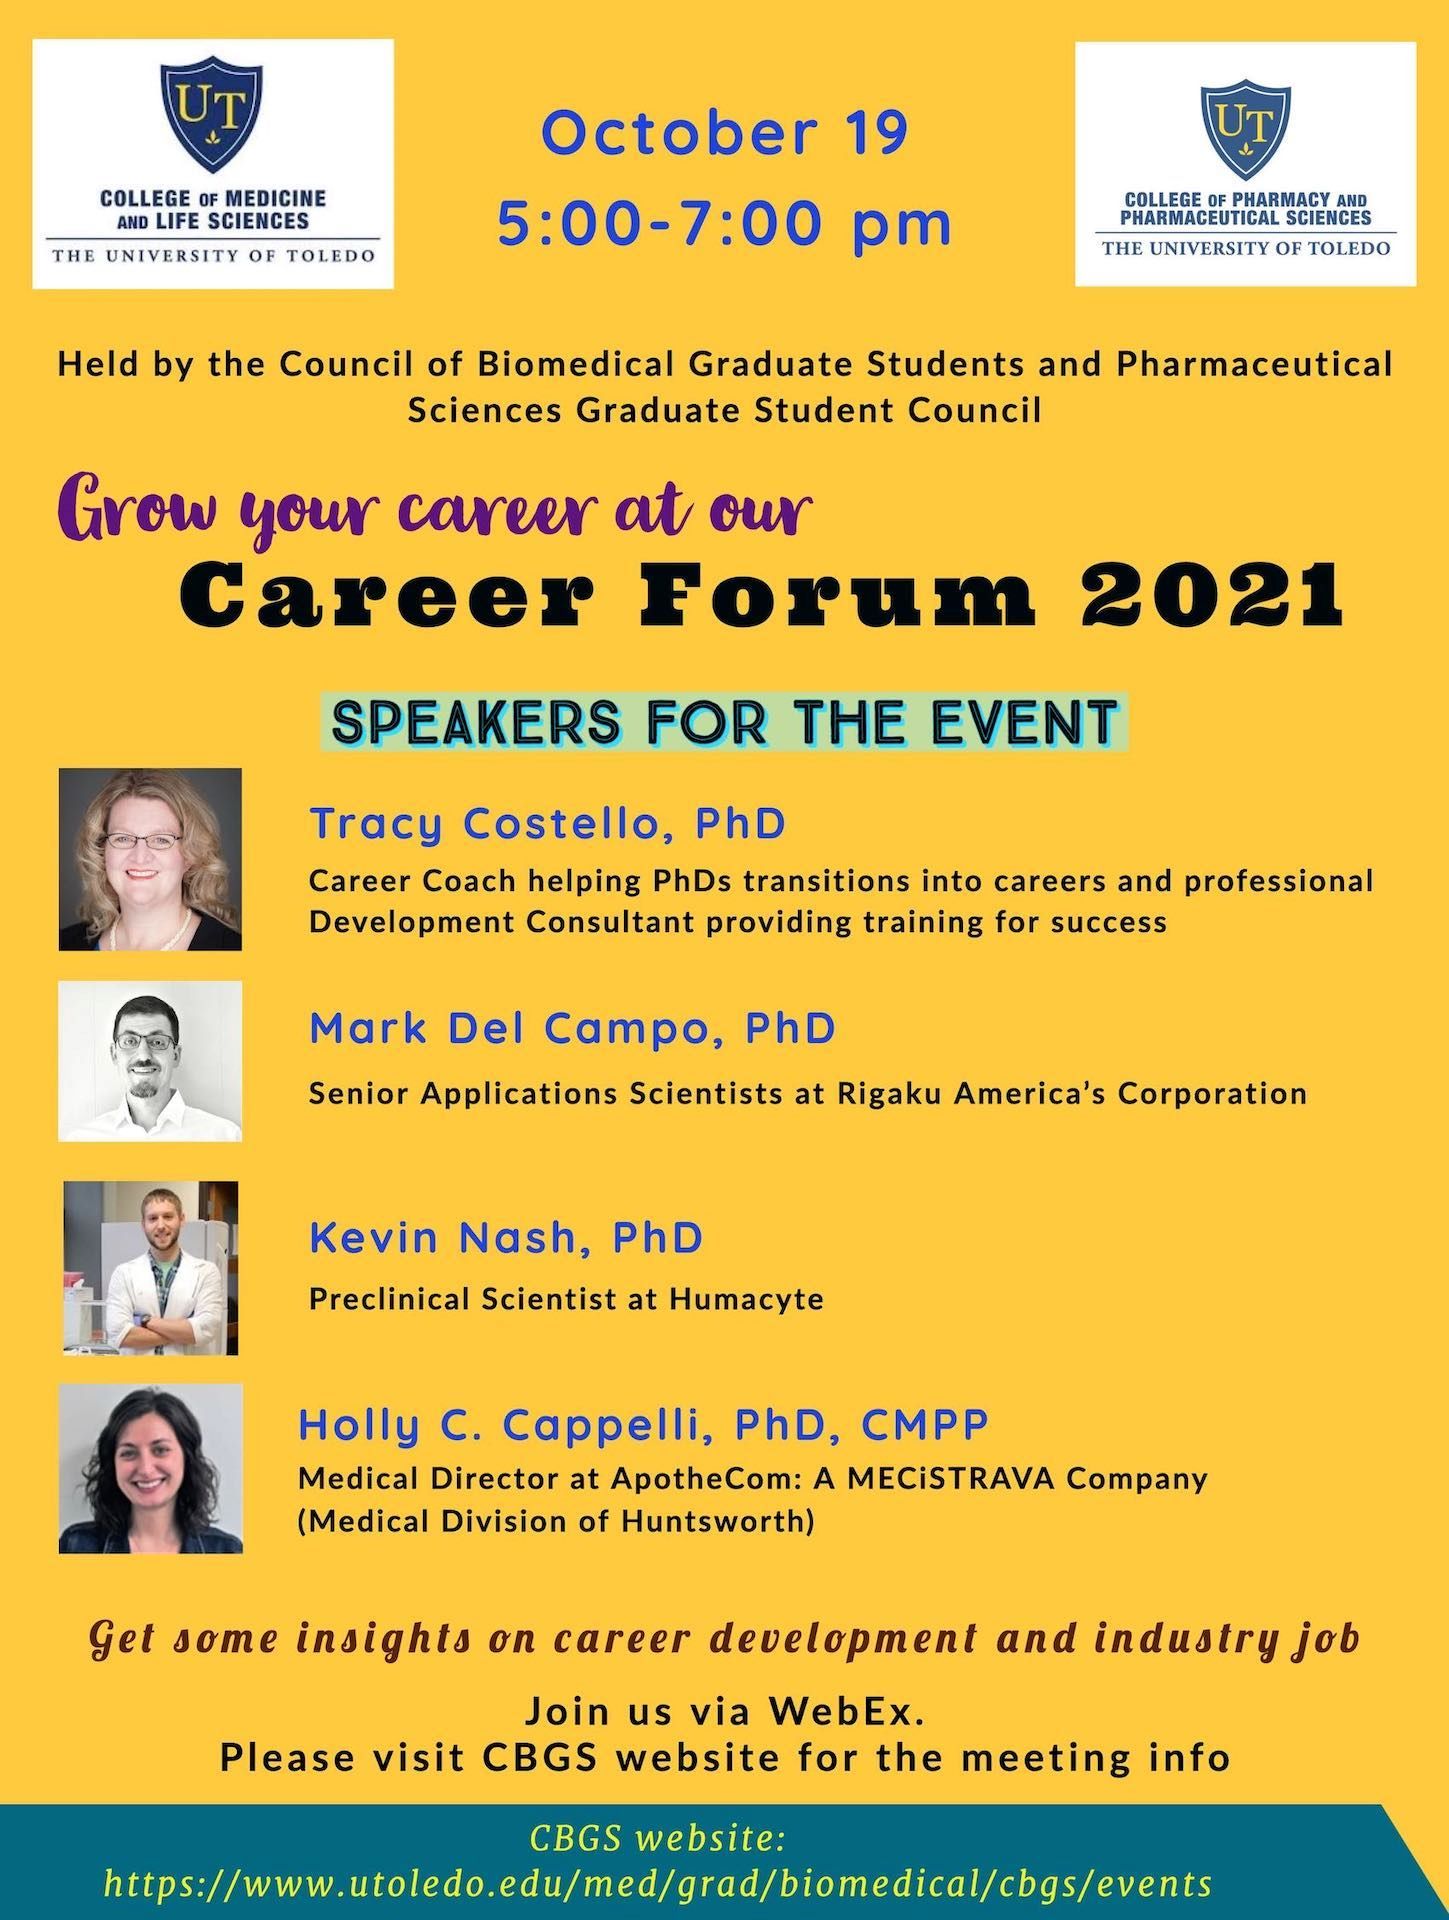 Career Forum 2021